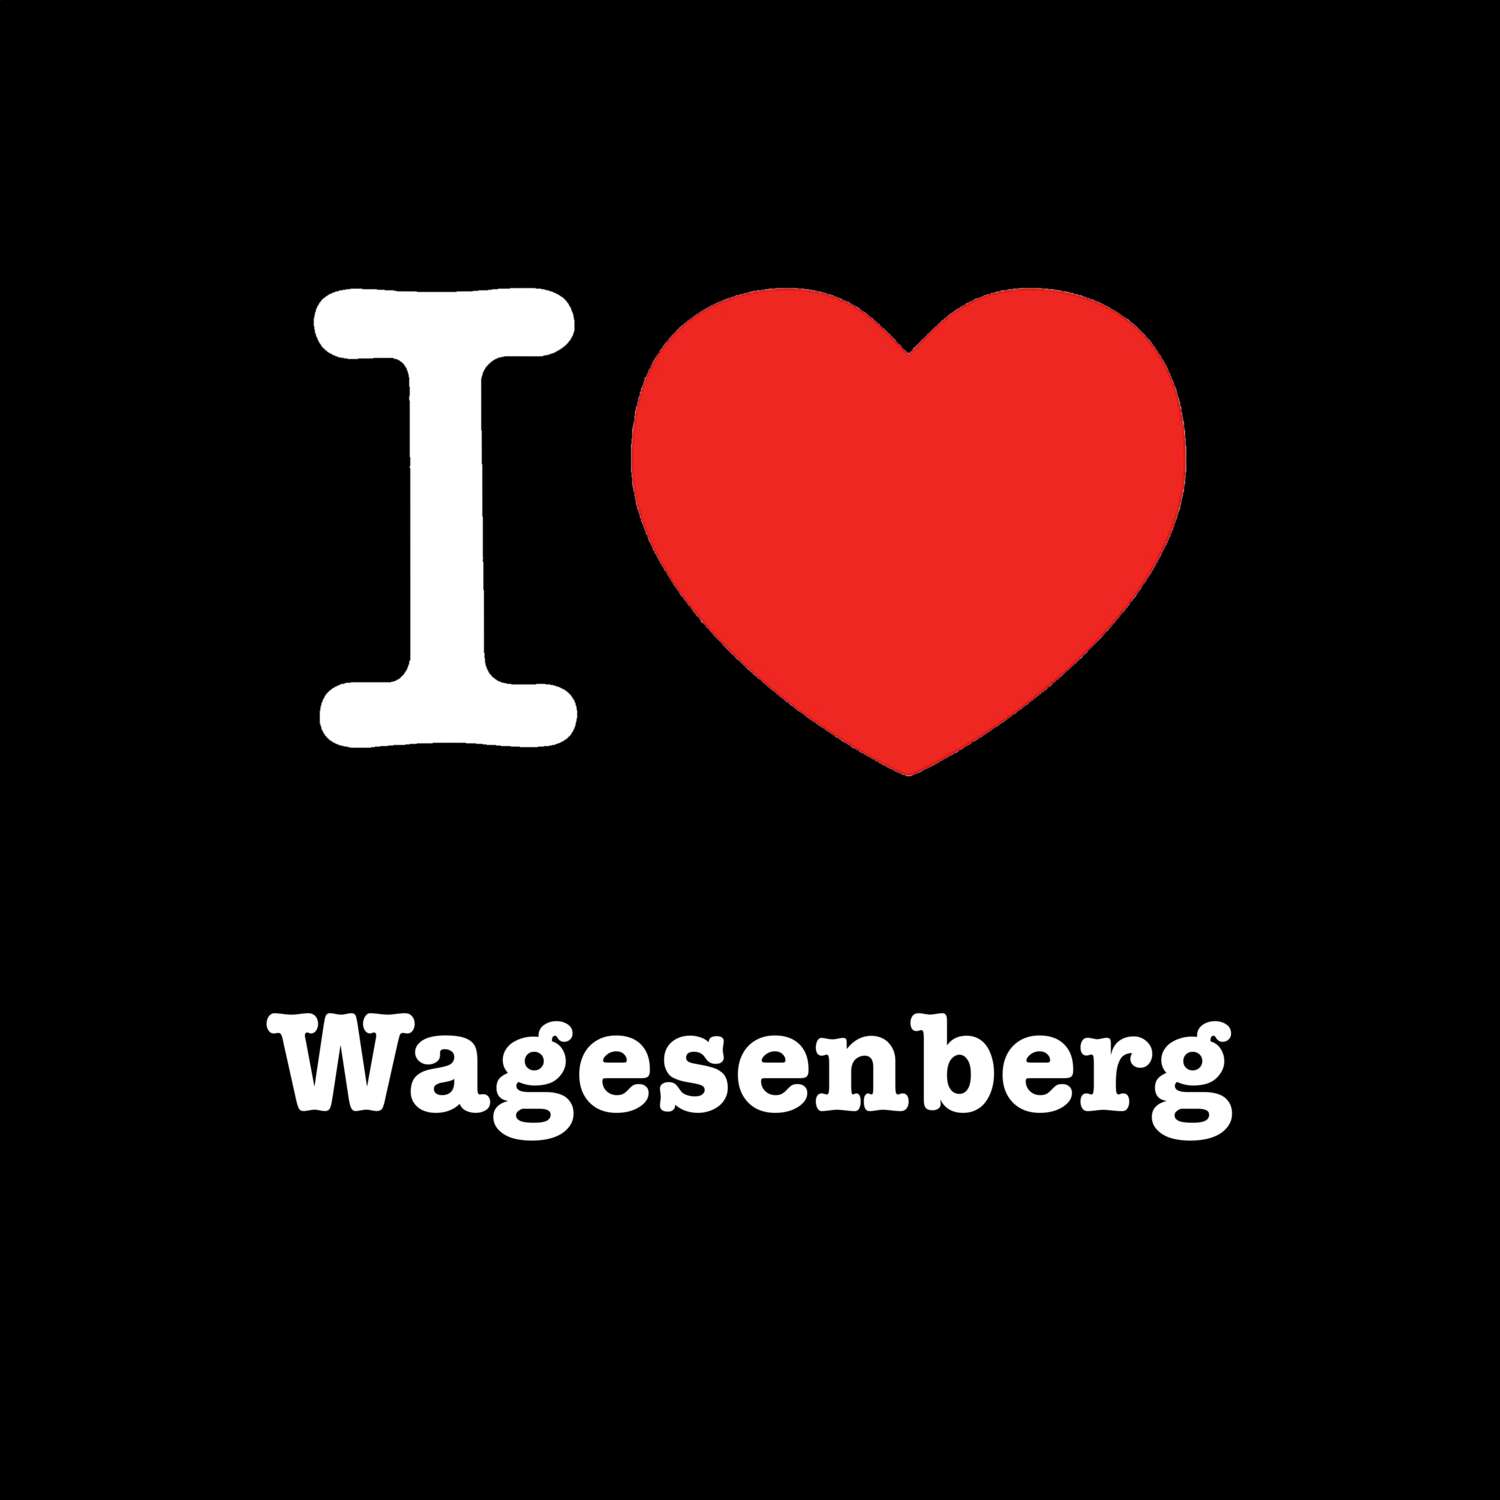 Wagesenberg T-Shirt »I love«